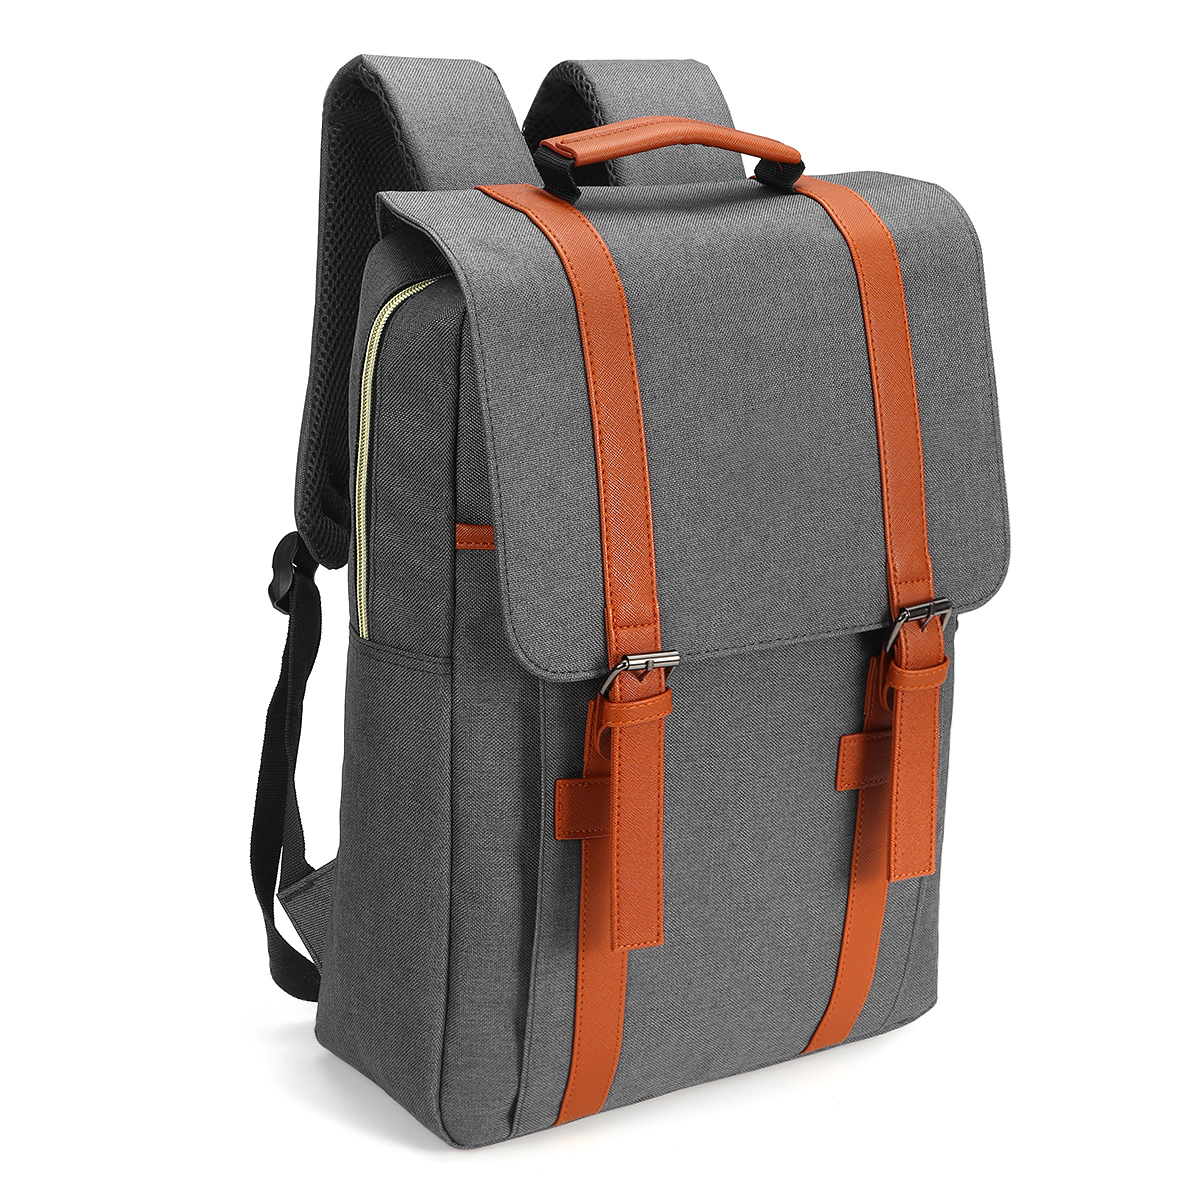 Outdoor-Travel-Backpack-Waterproof-Nylon-School-Bag-Large-Laptop-Bag-Unisex-Business-Bag-1615929-4